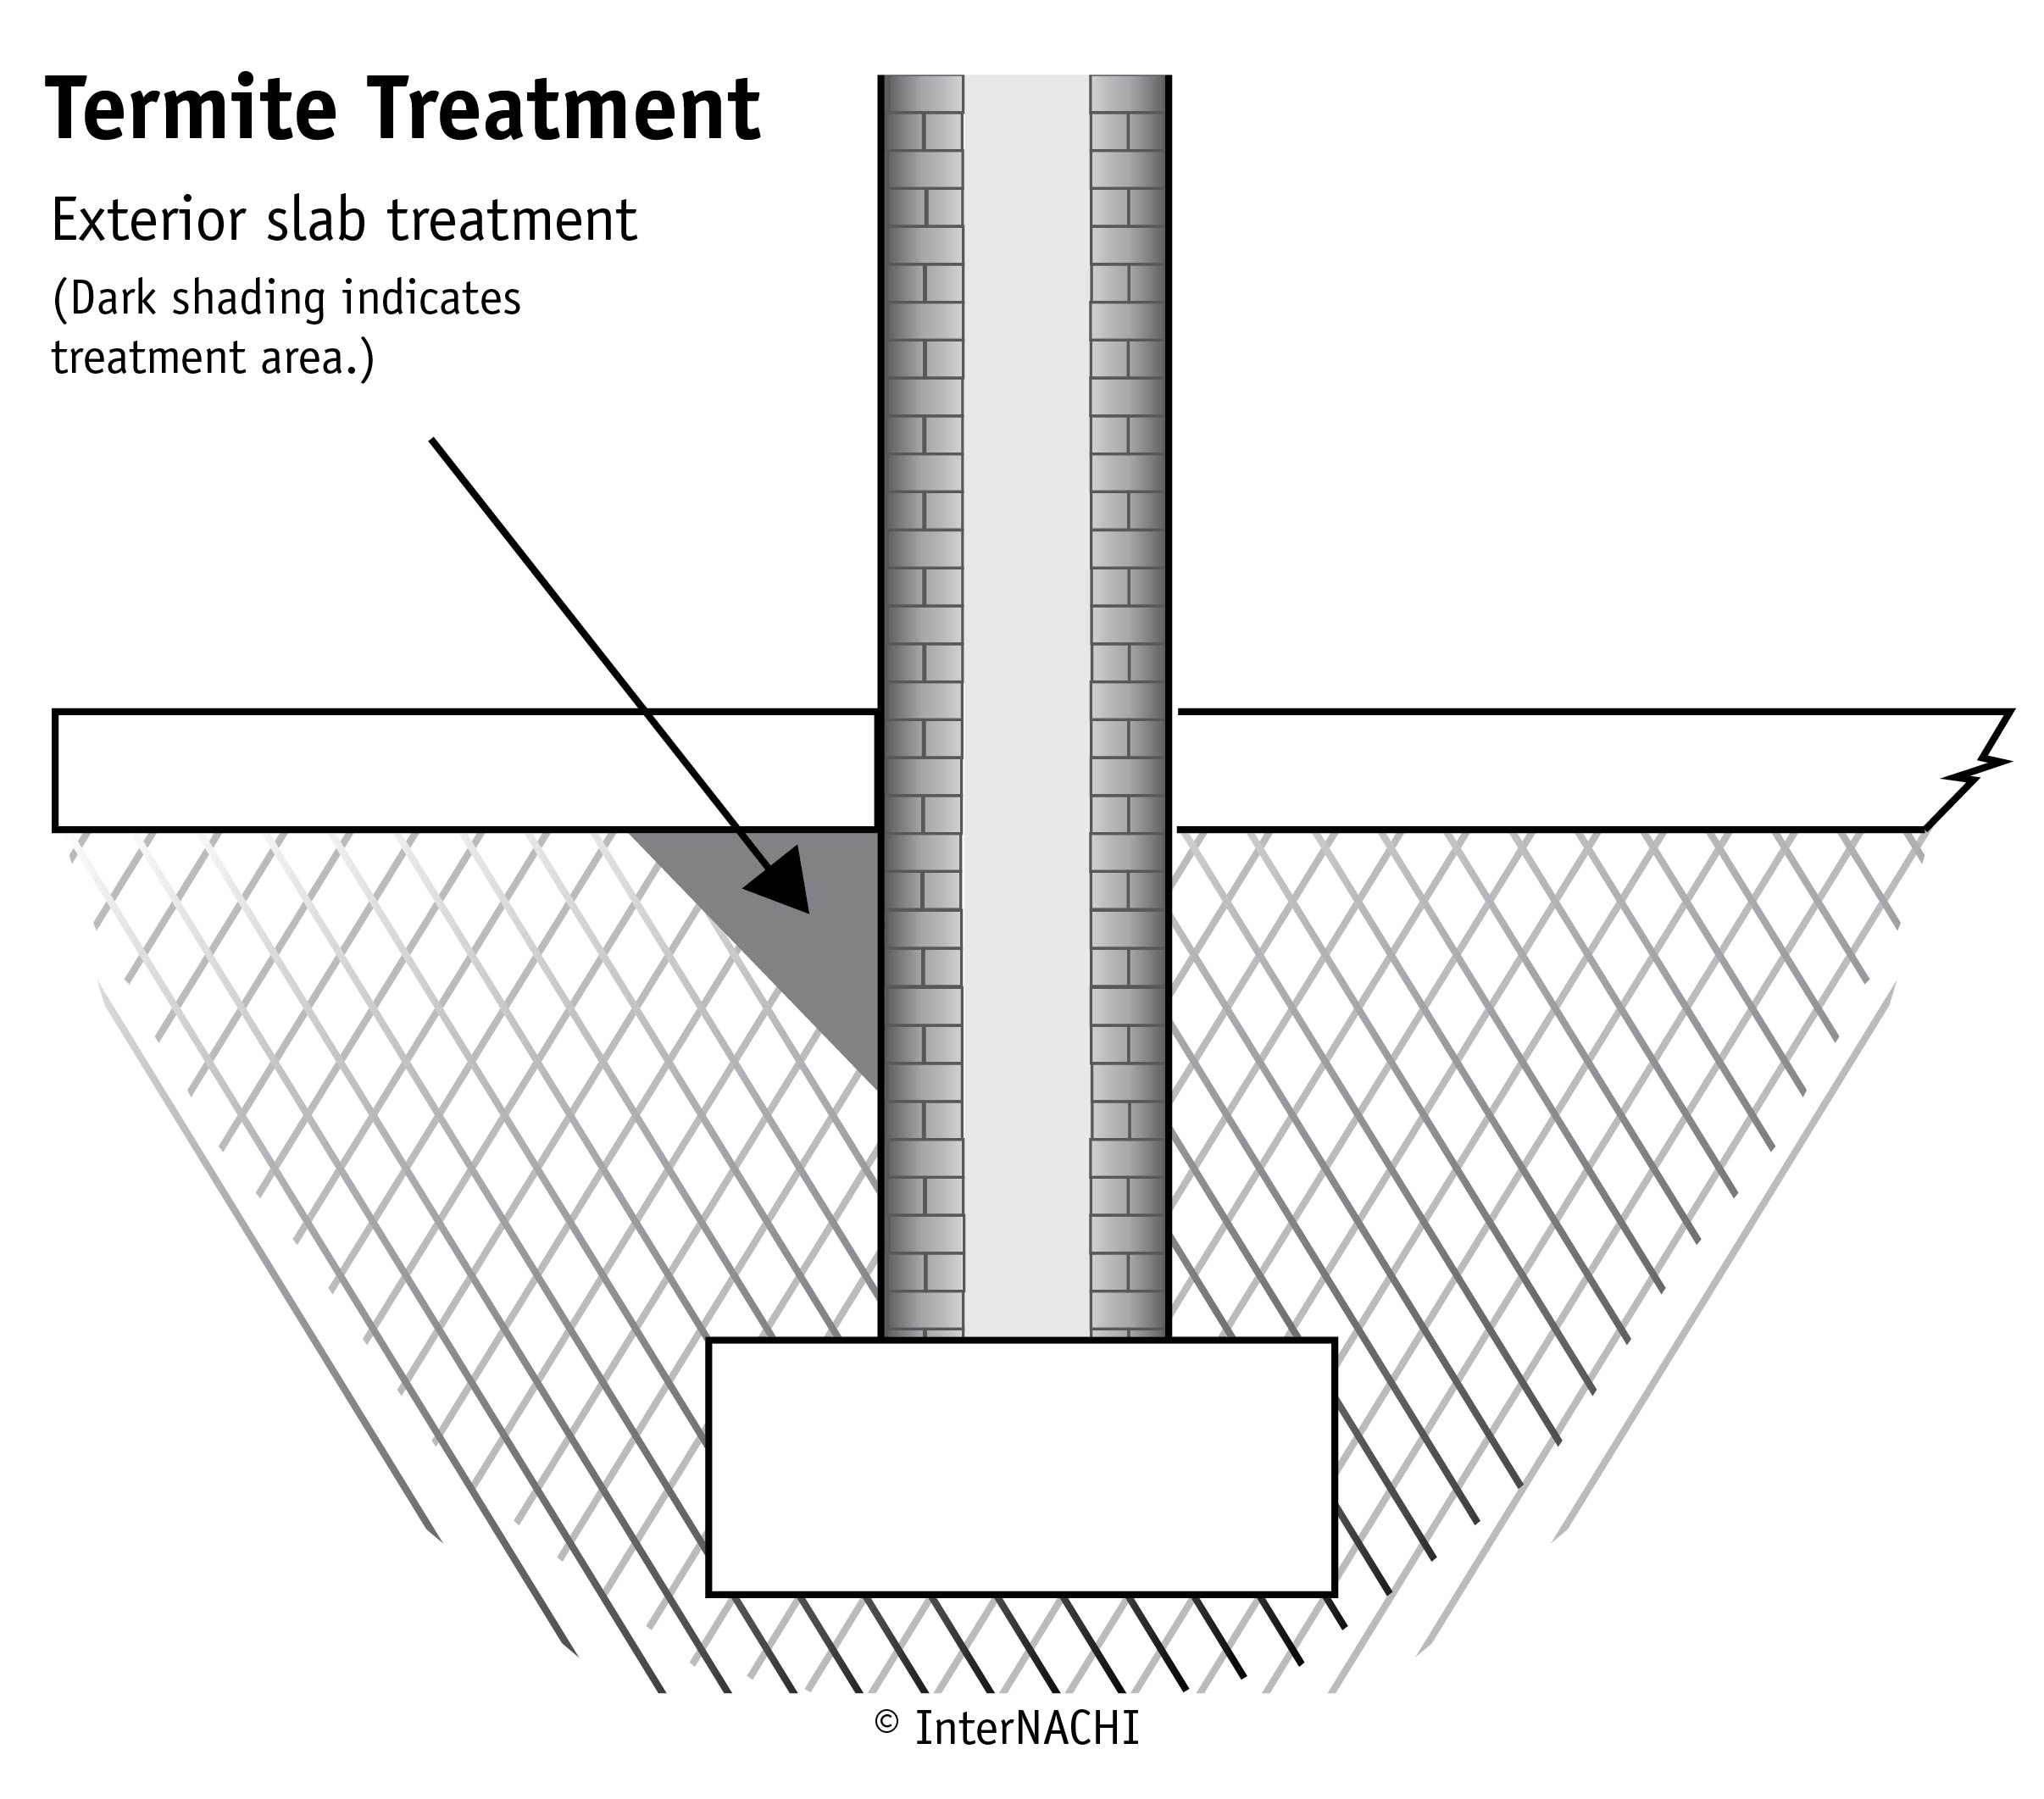 Termite treatment.